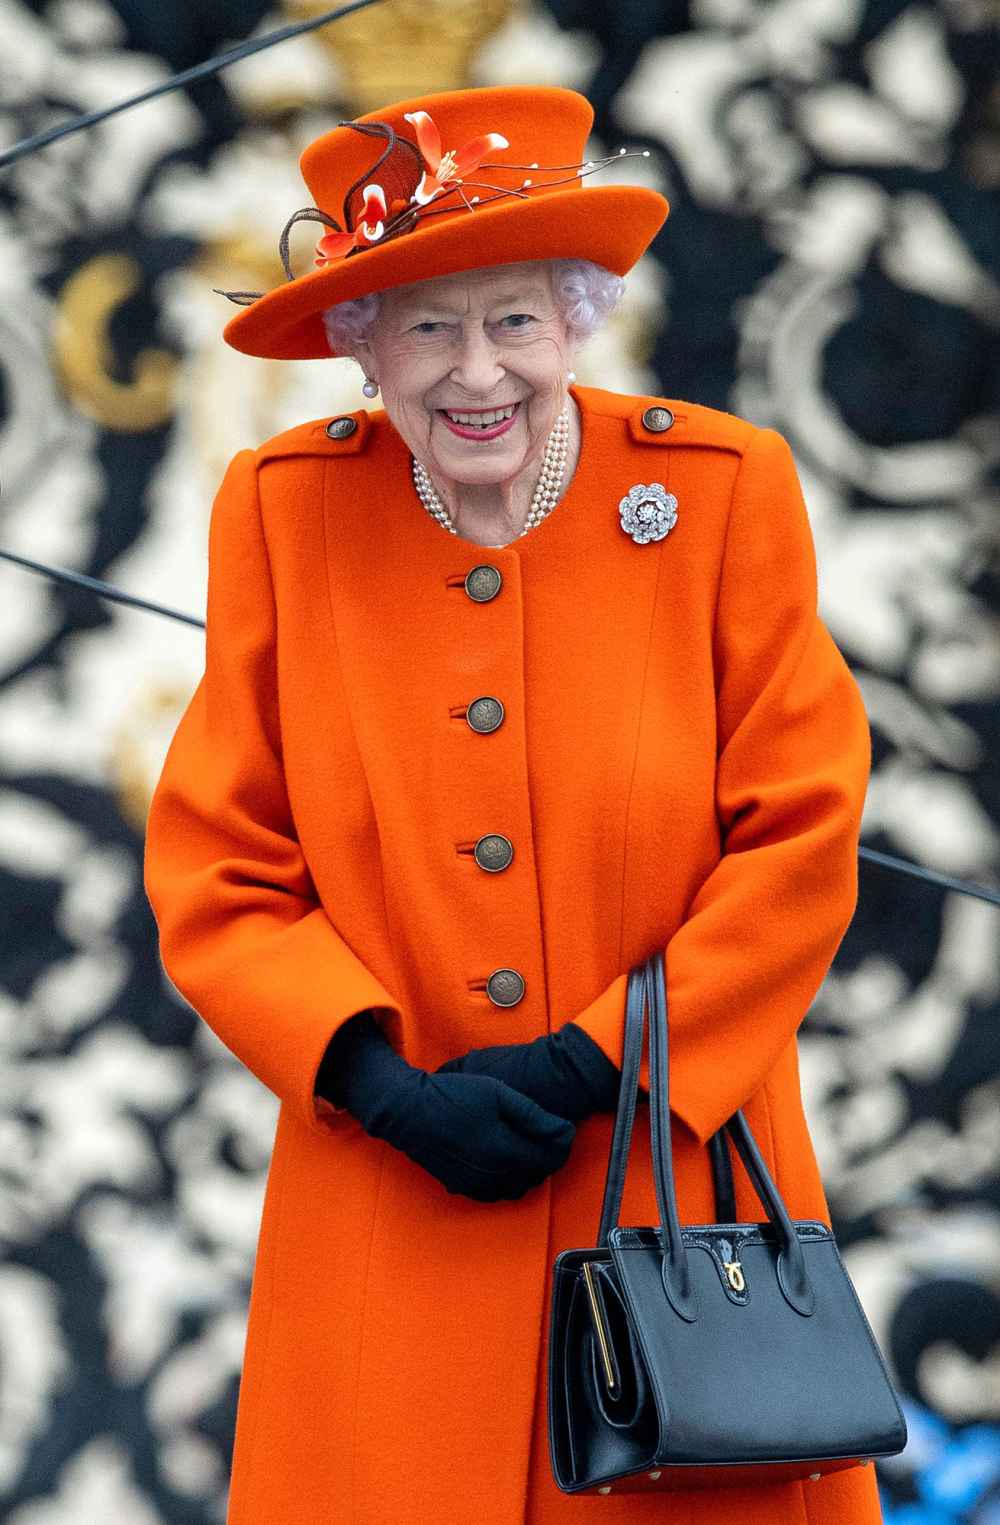 Queen Elizabeth II's Commemorative Coin Revealed Ahead of Platinum Jubilee